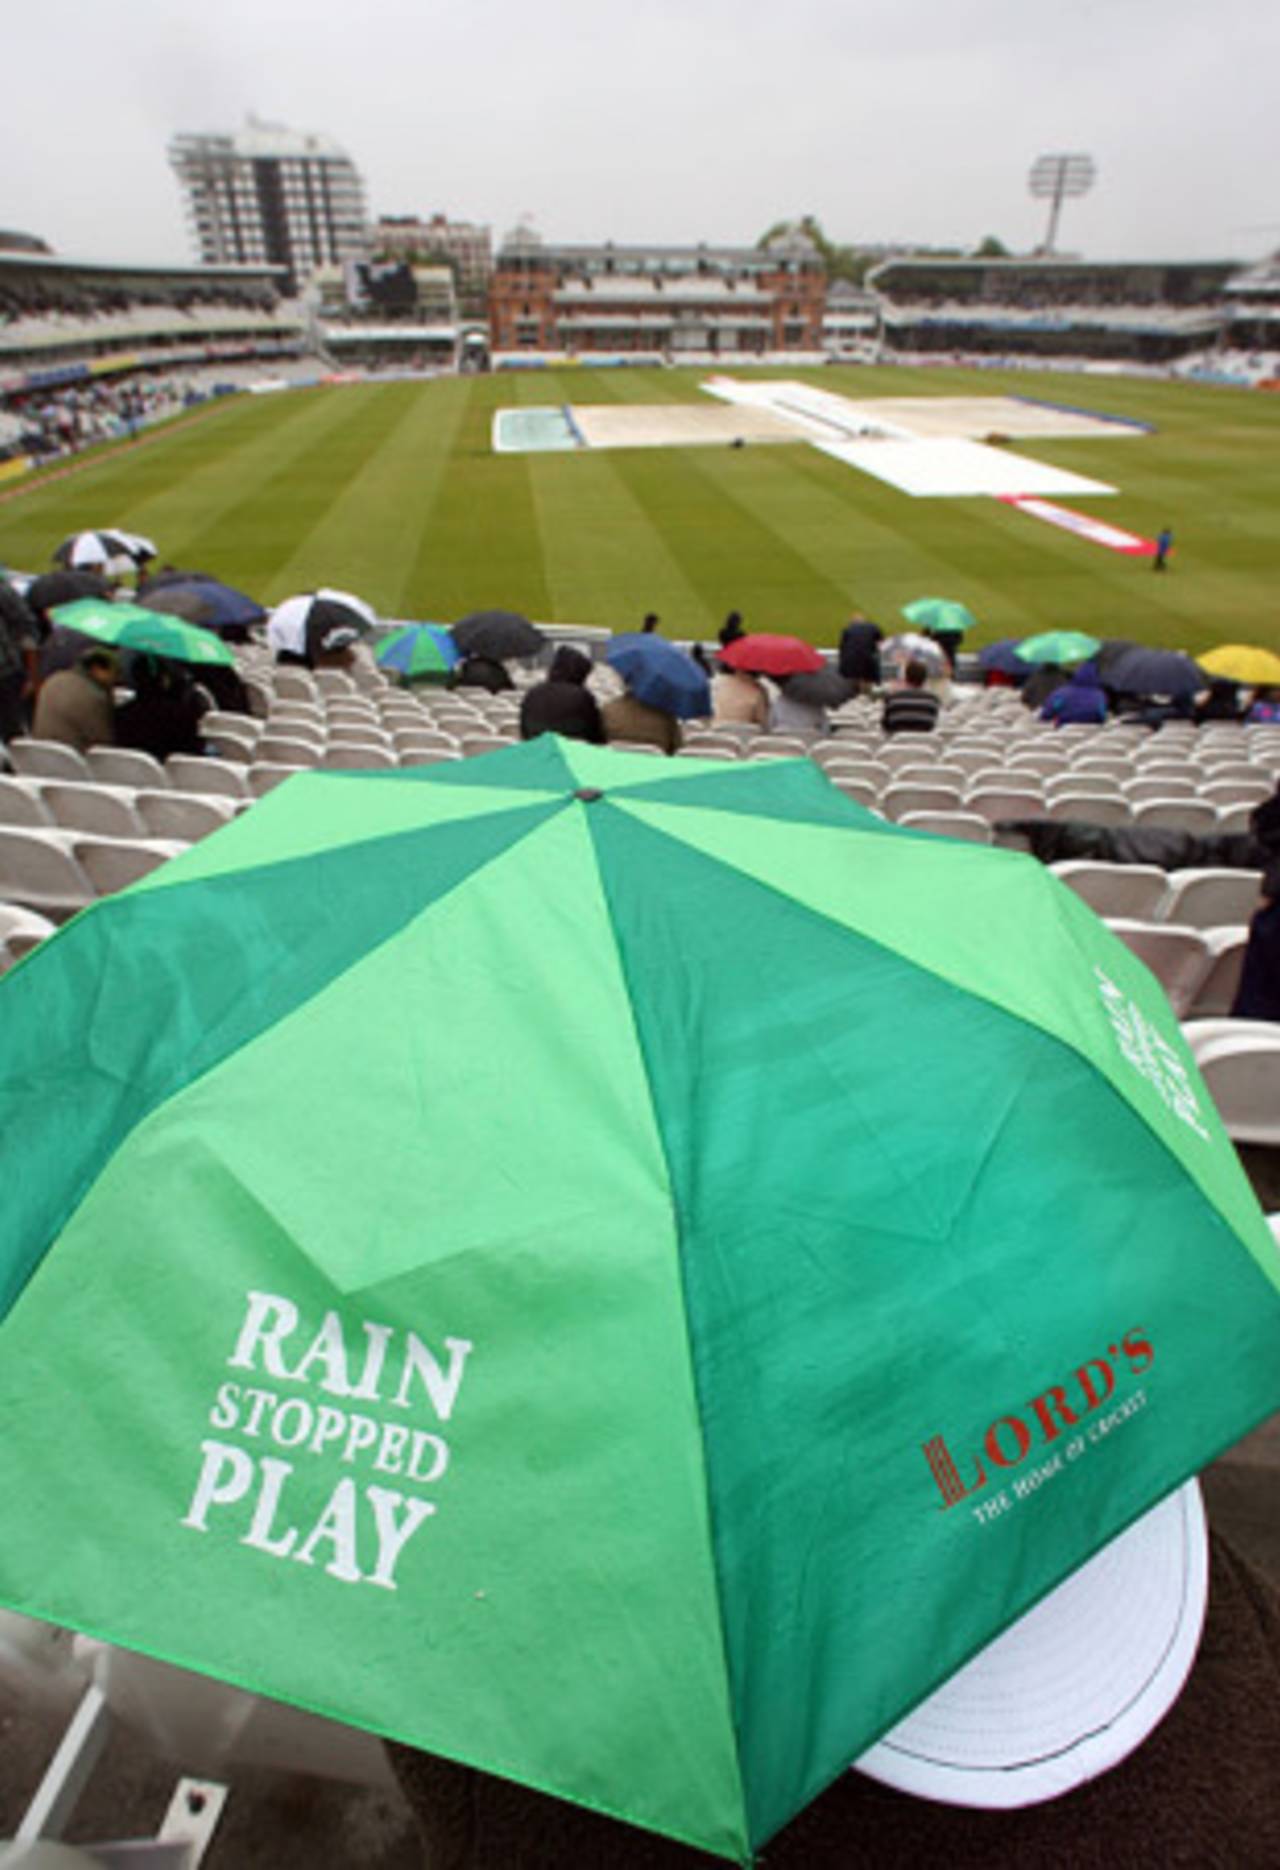 When at Lord's, buy a "rain stopped play" umbrella or five&nbsp;&nbsp;&bull;&nbsp;&nbsp;AFP